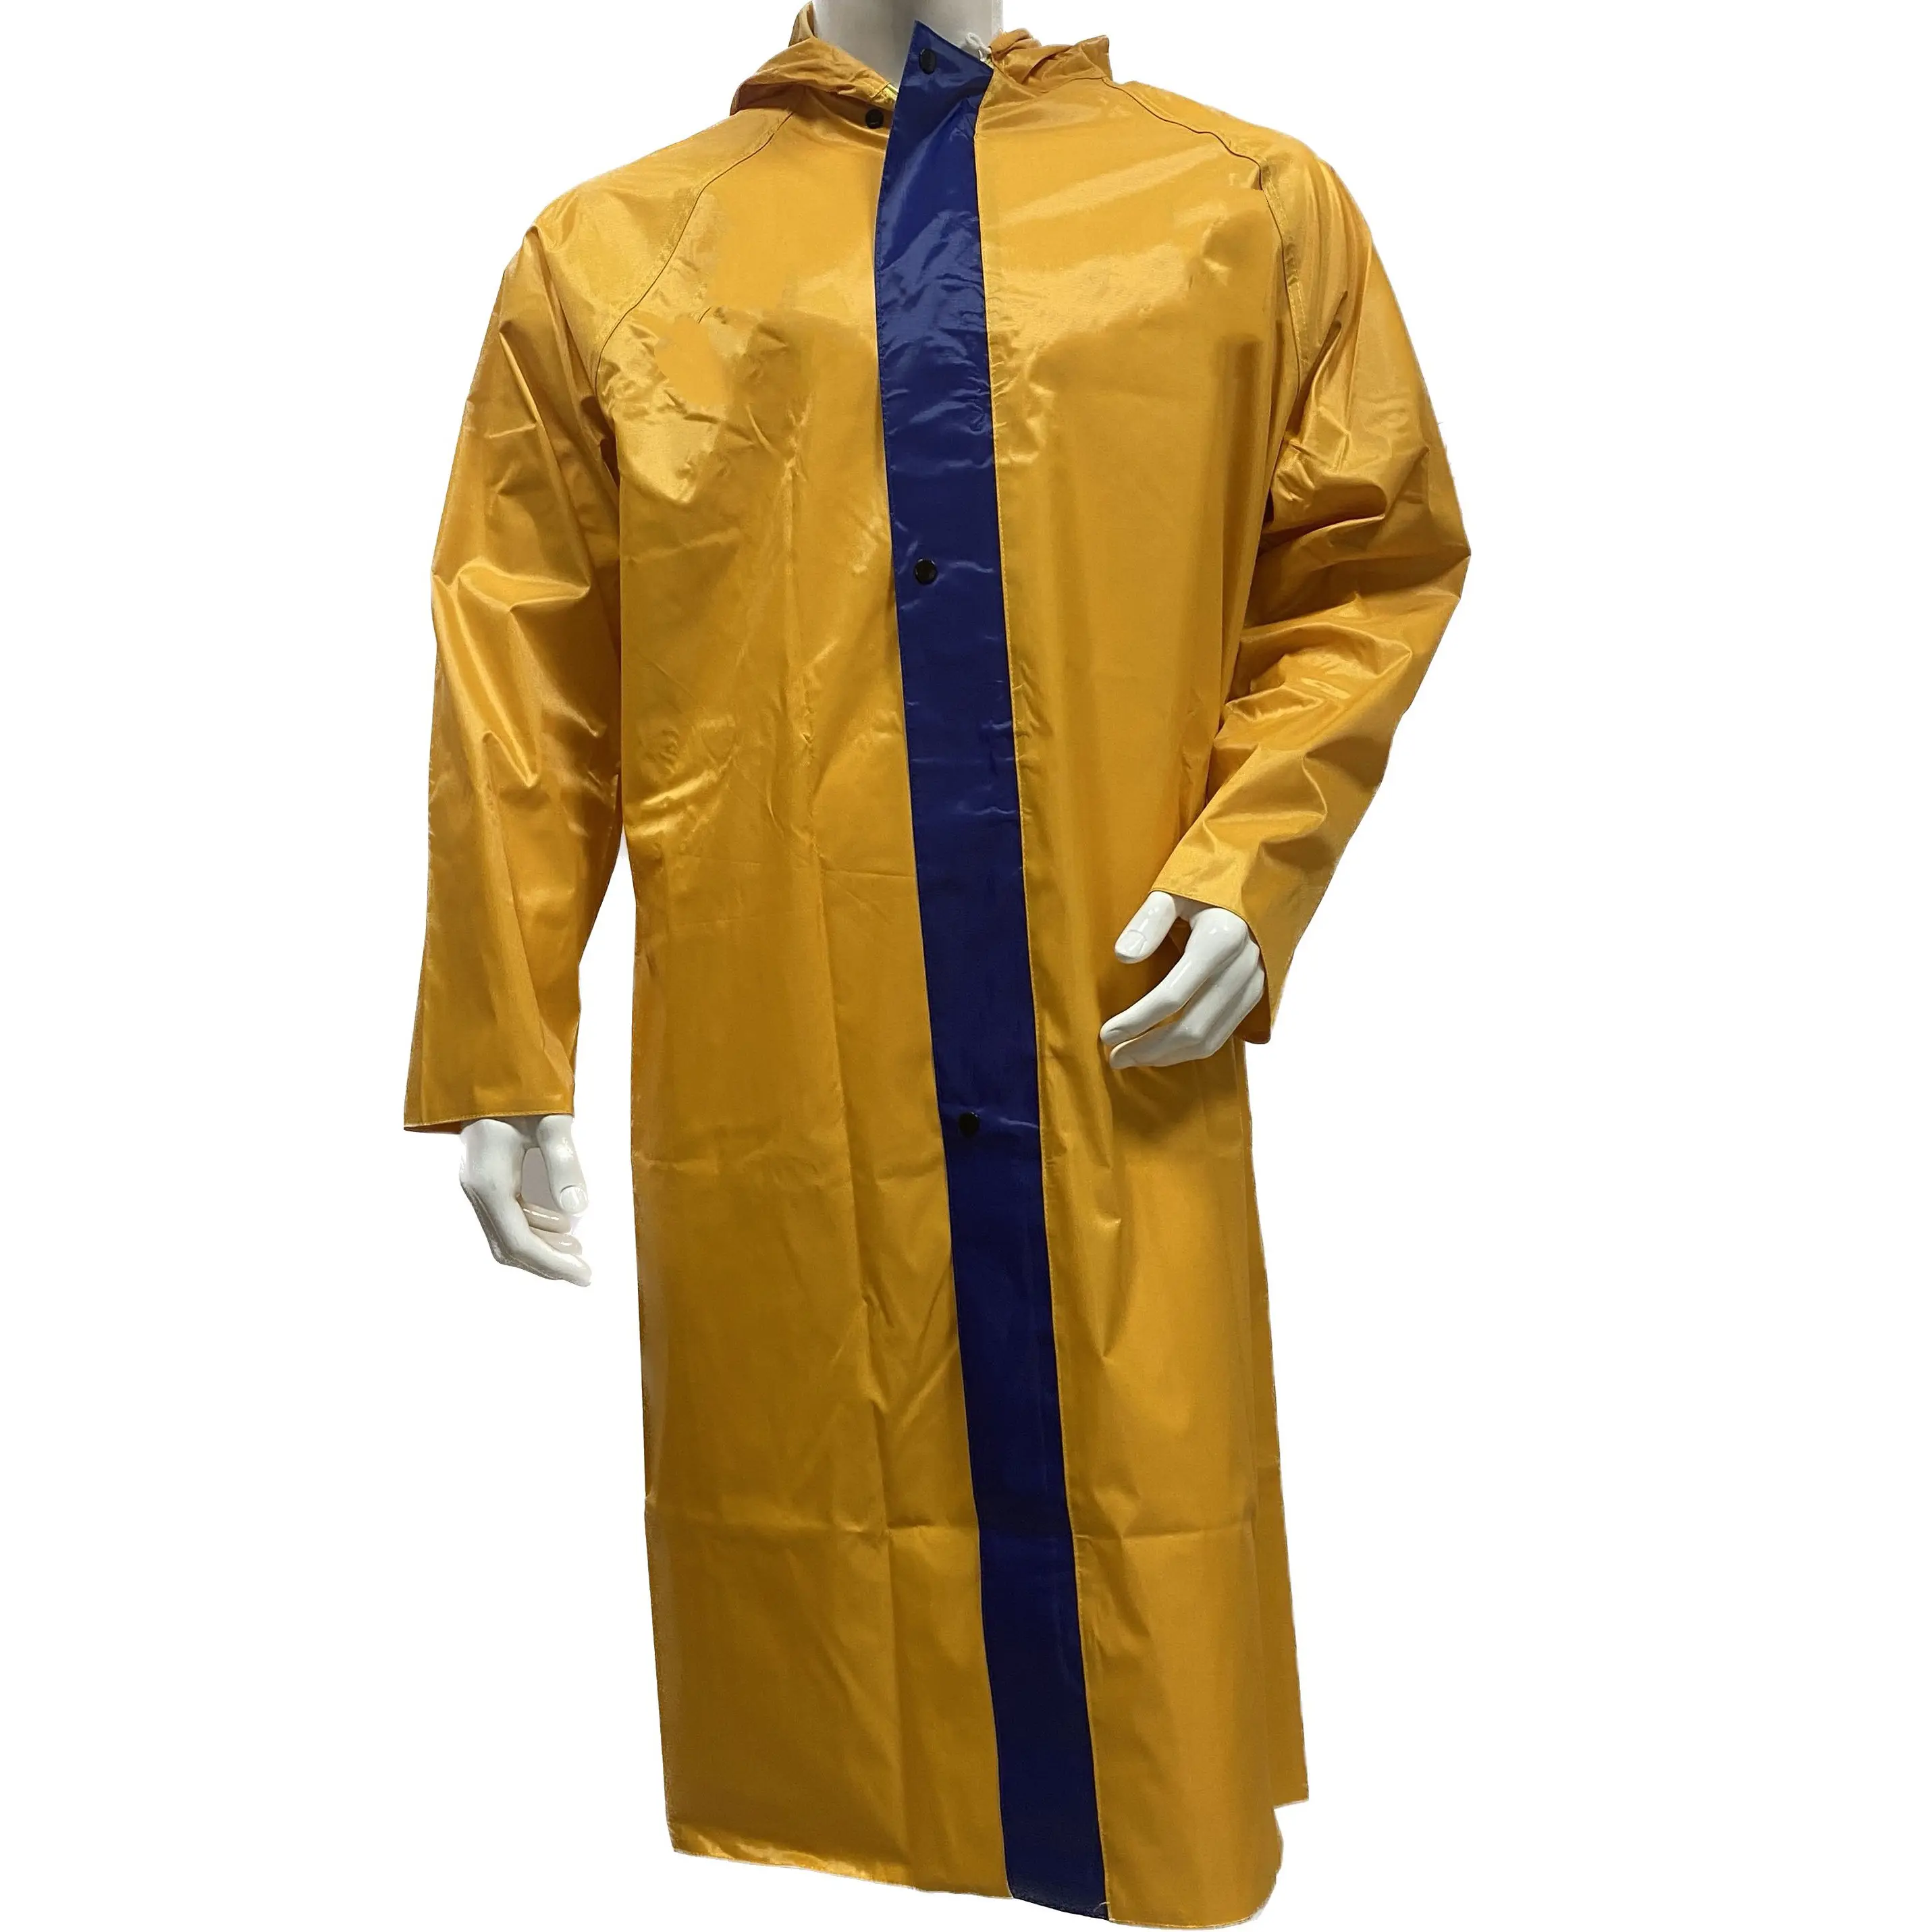 Oxford Cloth Material Outdoor hiking PVC raincoat rainwear